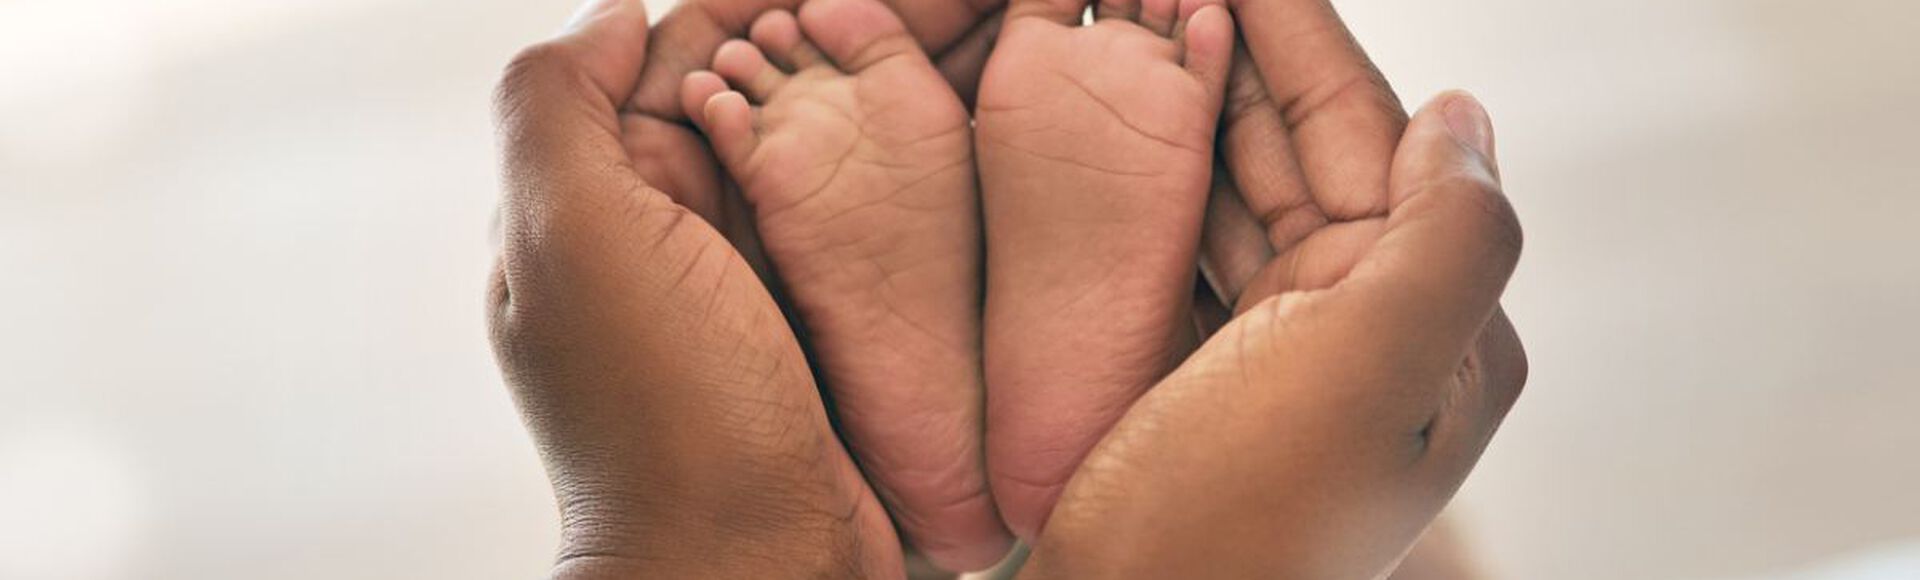 pés de bebe envoltos por mãos de adulto